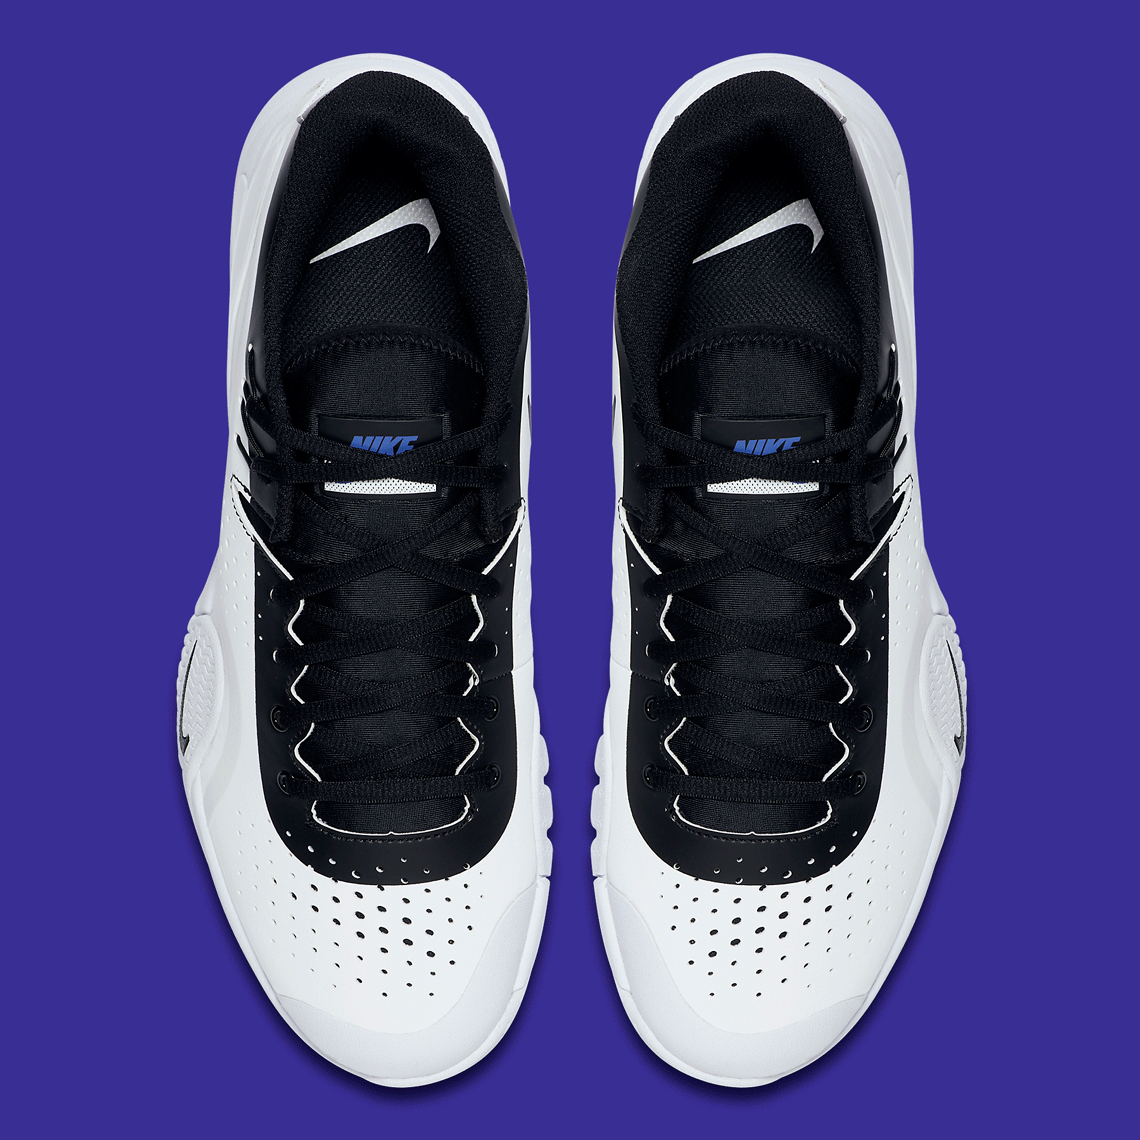 Nikecourt pickup adidas terrex hiking boots kids boys pants Bq0234 102 5